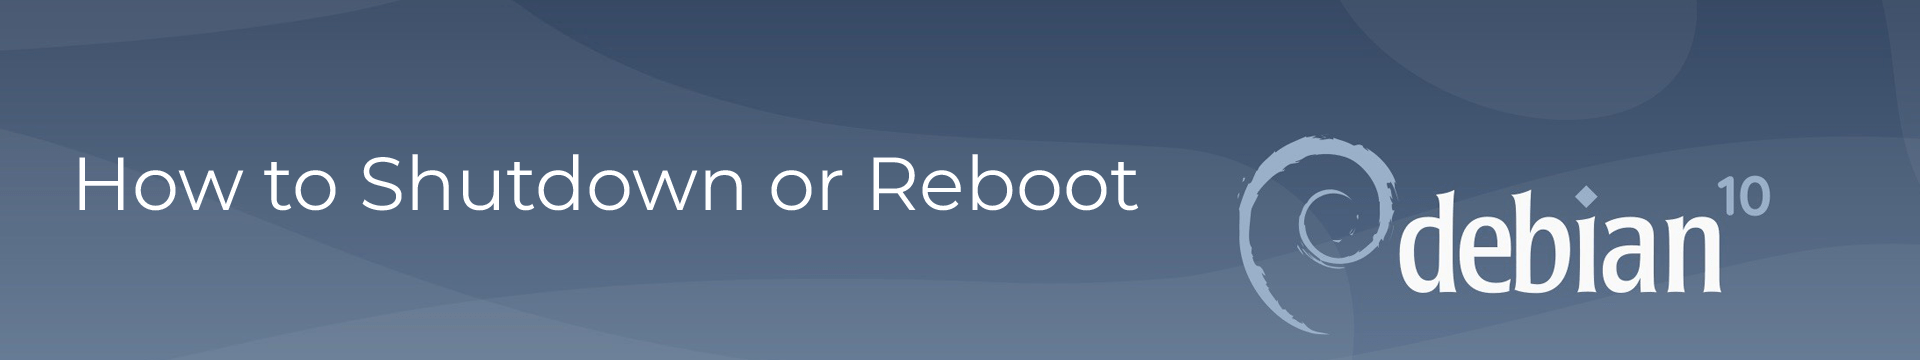 How to Shutdown or Reboot Debian 10